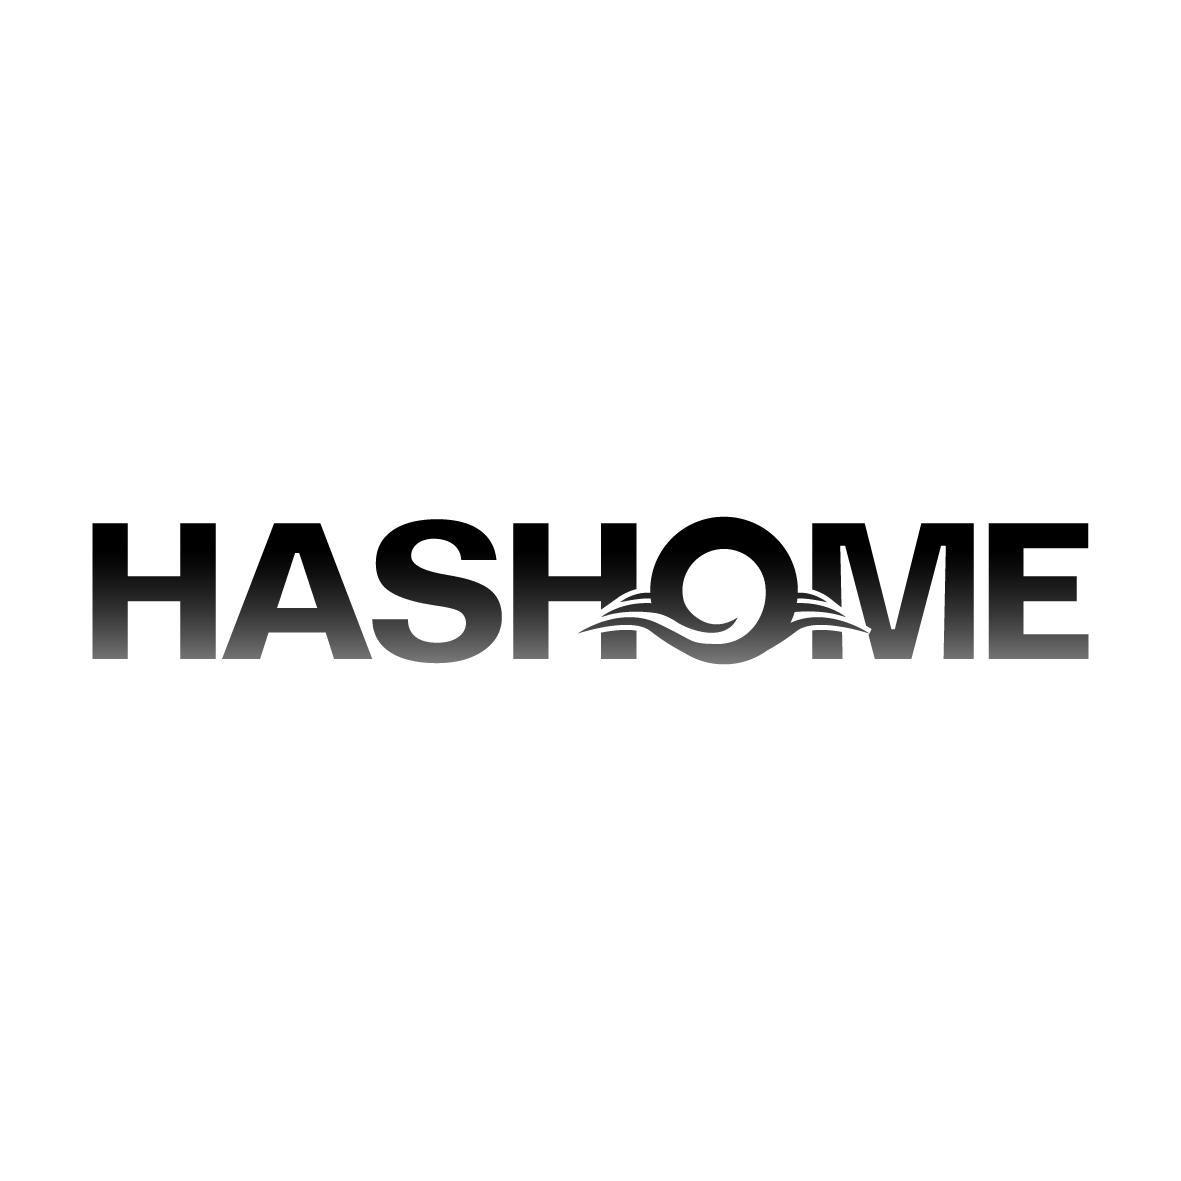 HASHOME商标转让